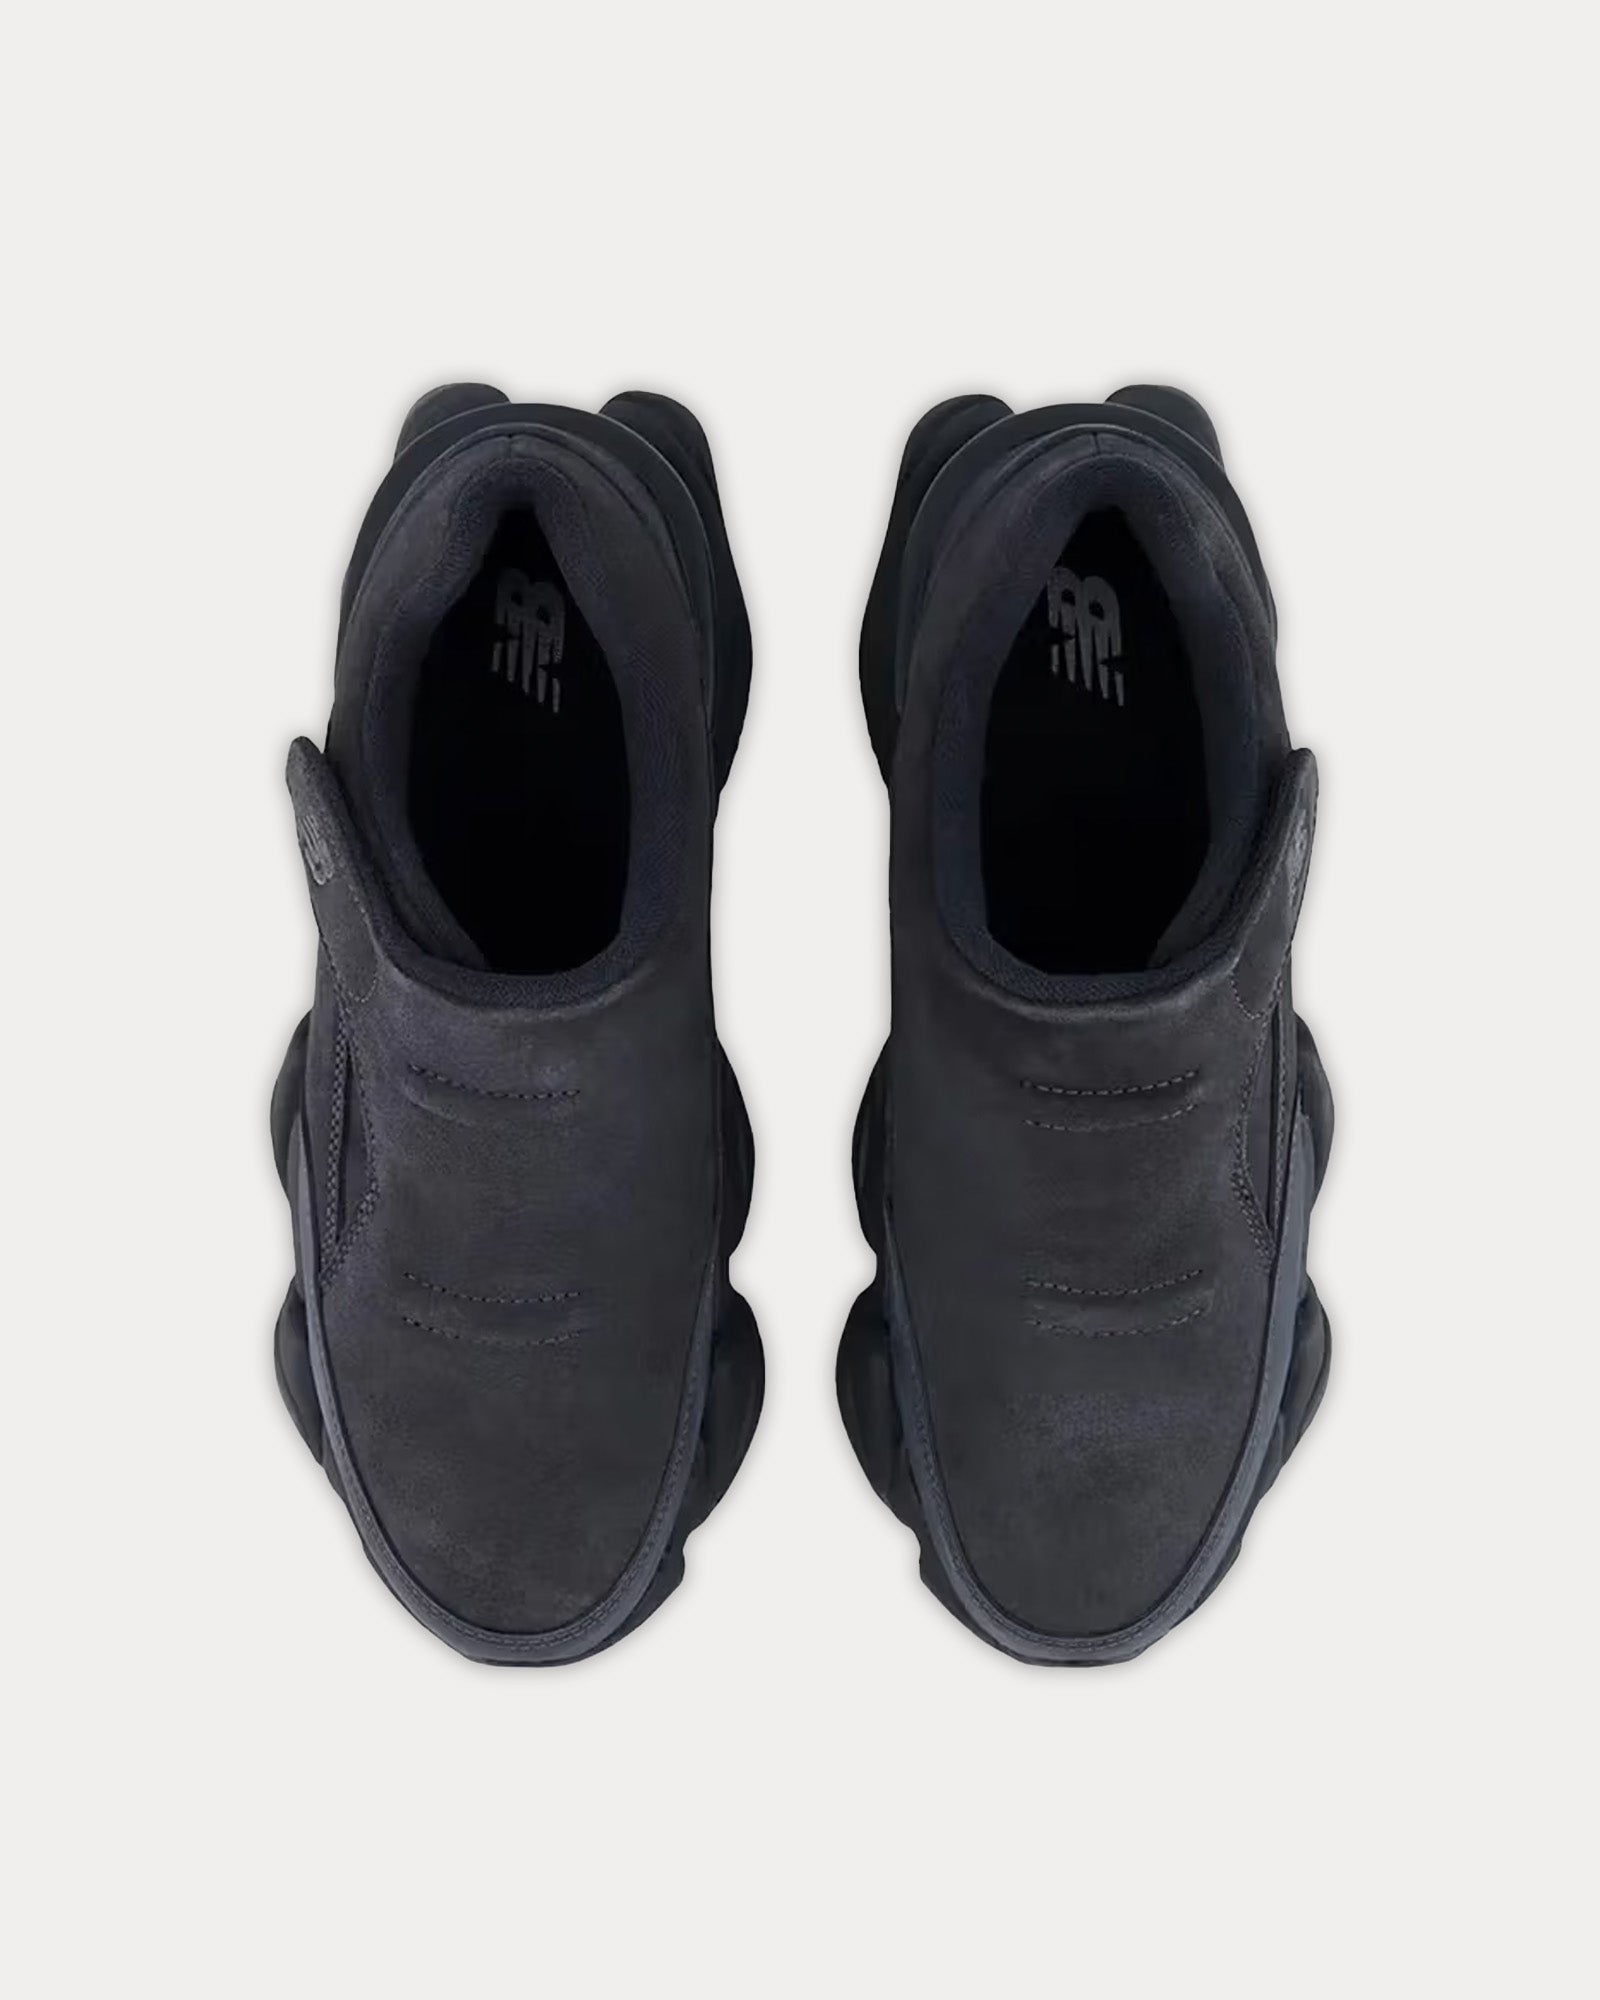 New Balance - 8040 Navy Slip On Sneakers